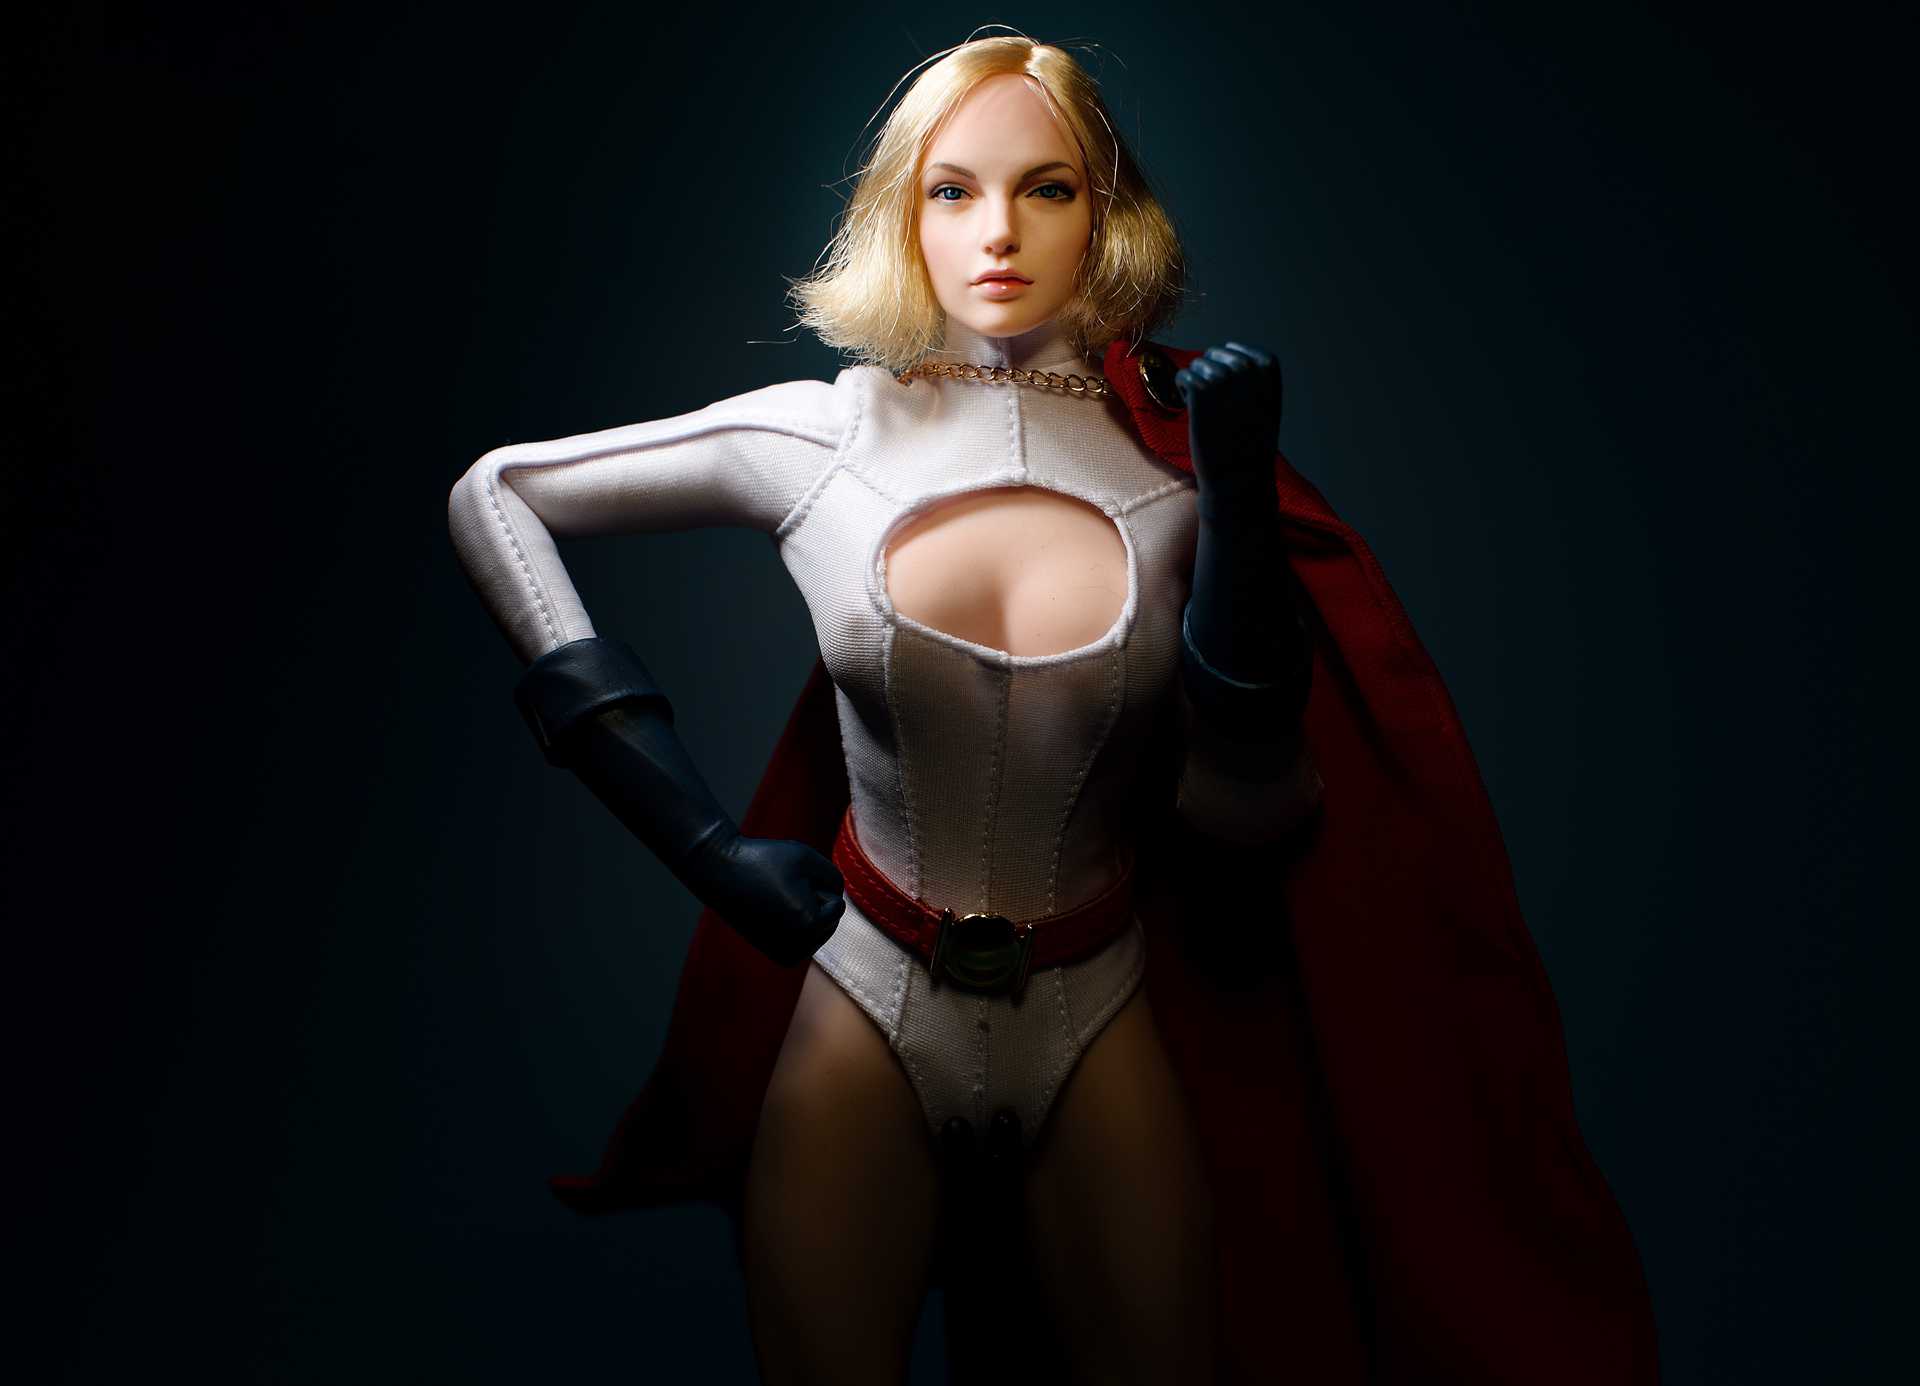 https://figround.com/assets/img/2019-11-22-tbleague-phicen-supergirl-suit/001.jpg